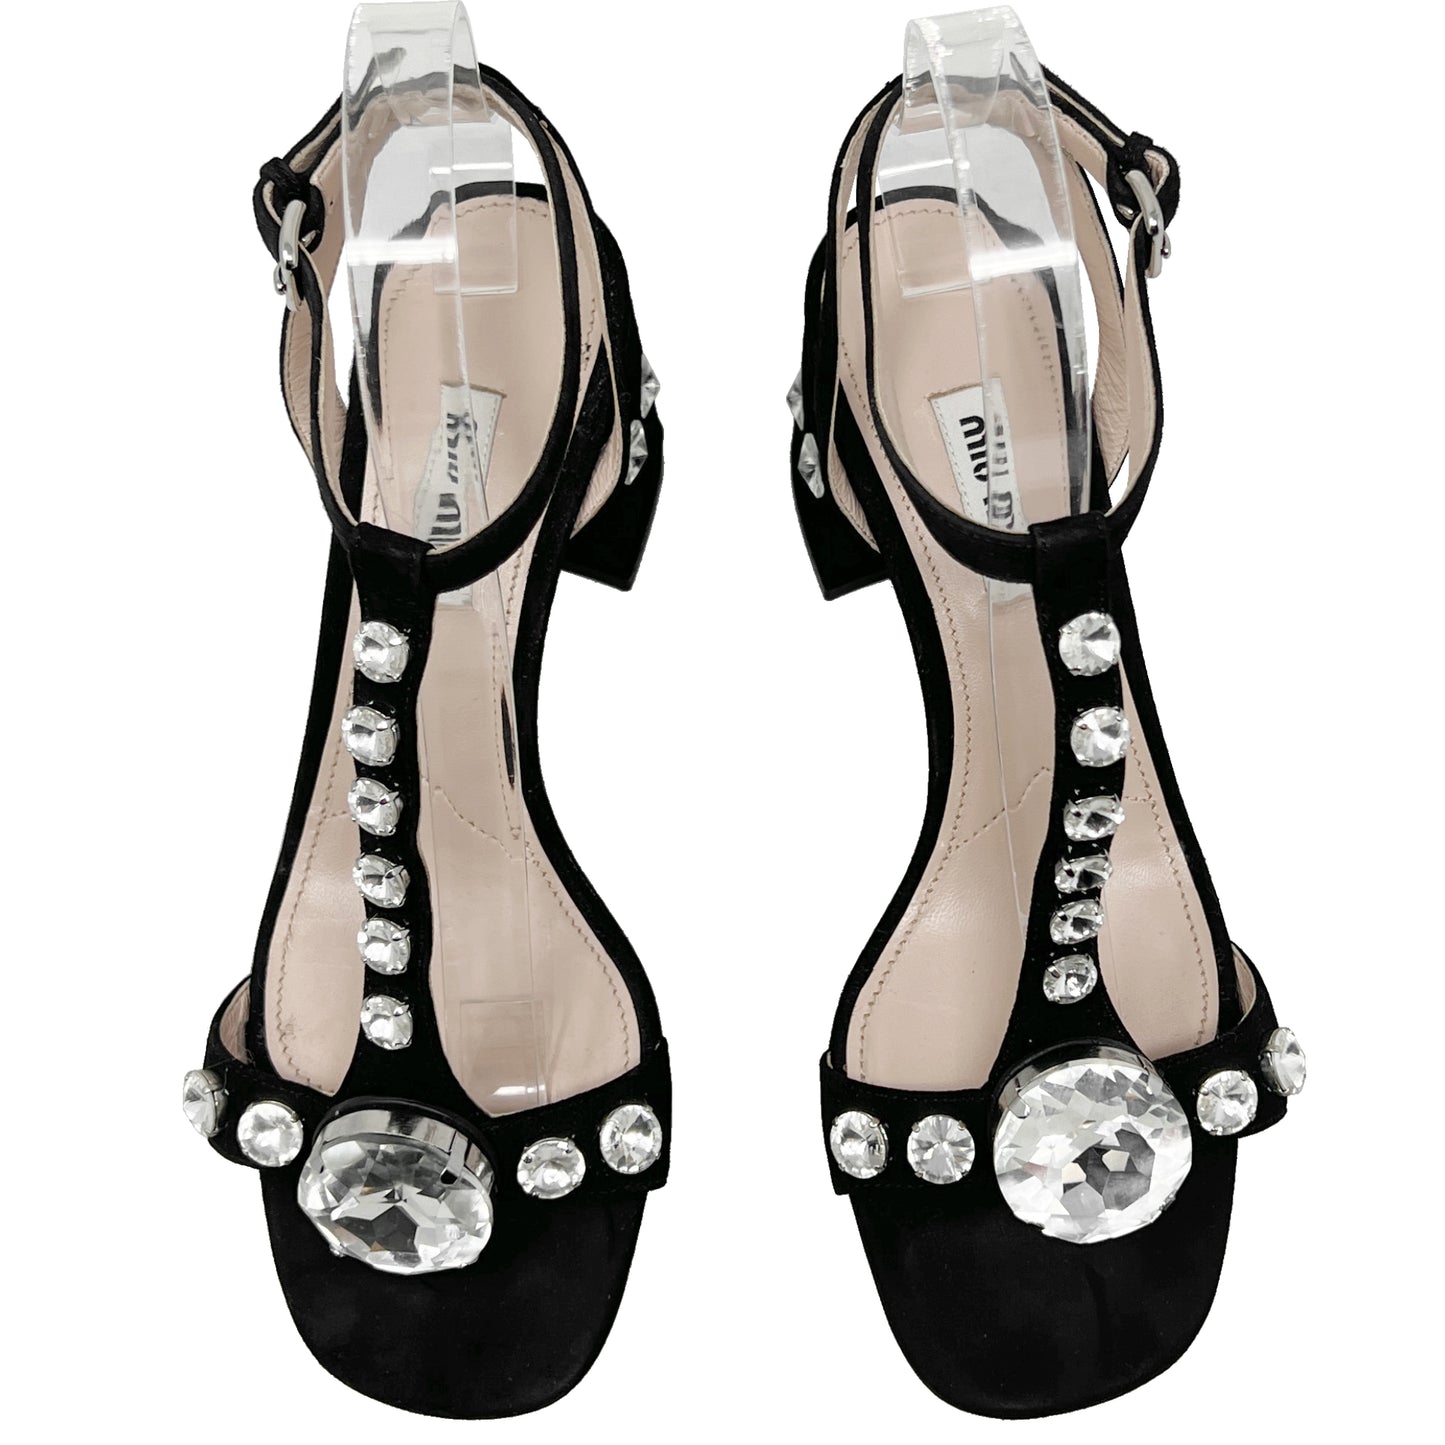 Miu Miu Black Suede Crystal Embellished T-Strap Low Block Heels Sandals Size EU 37.5